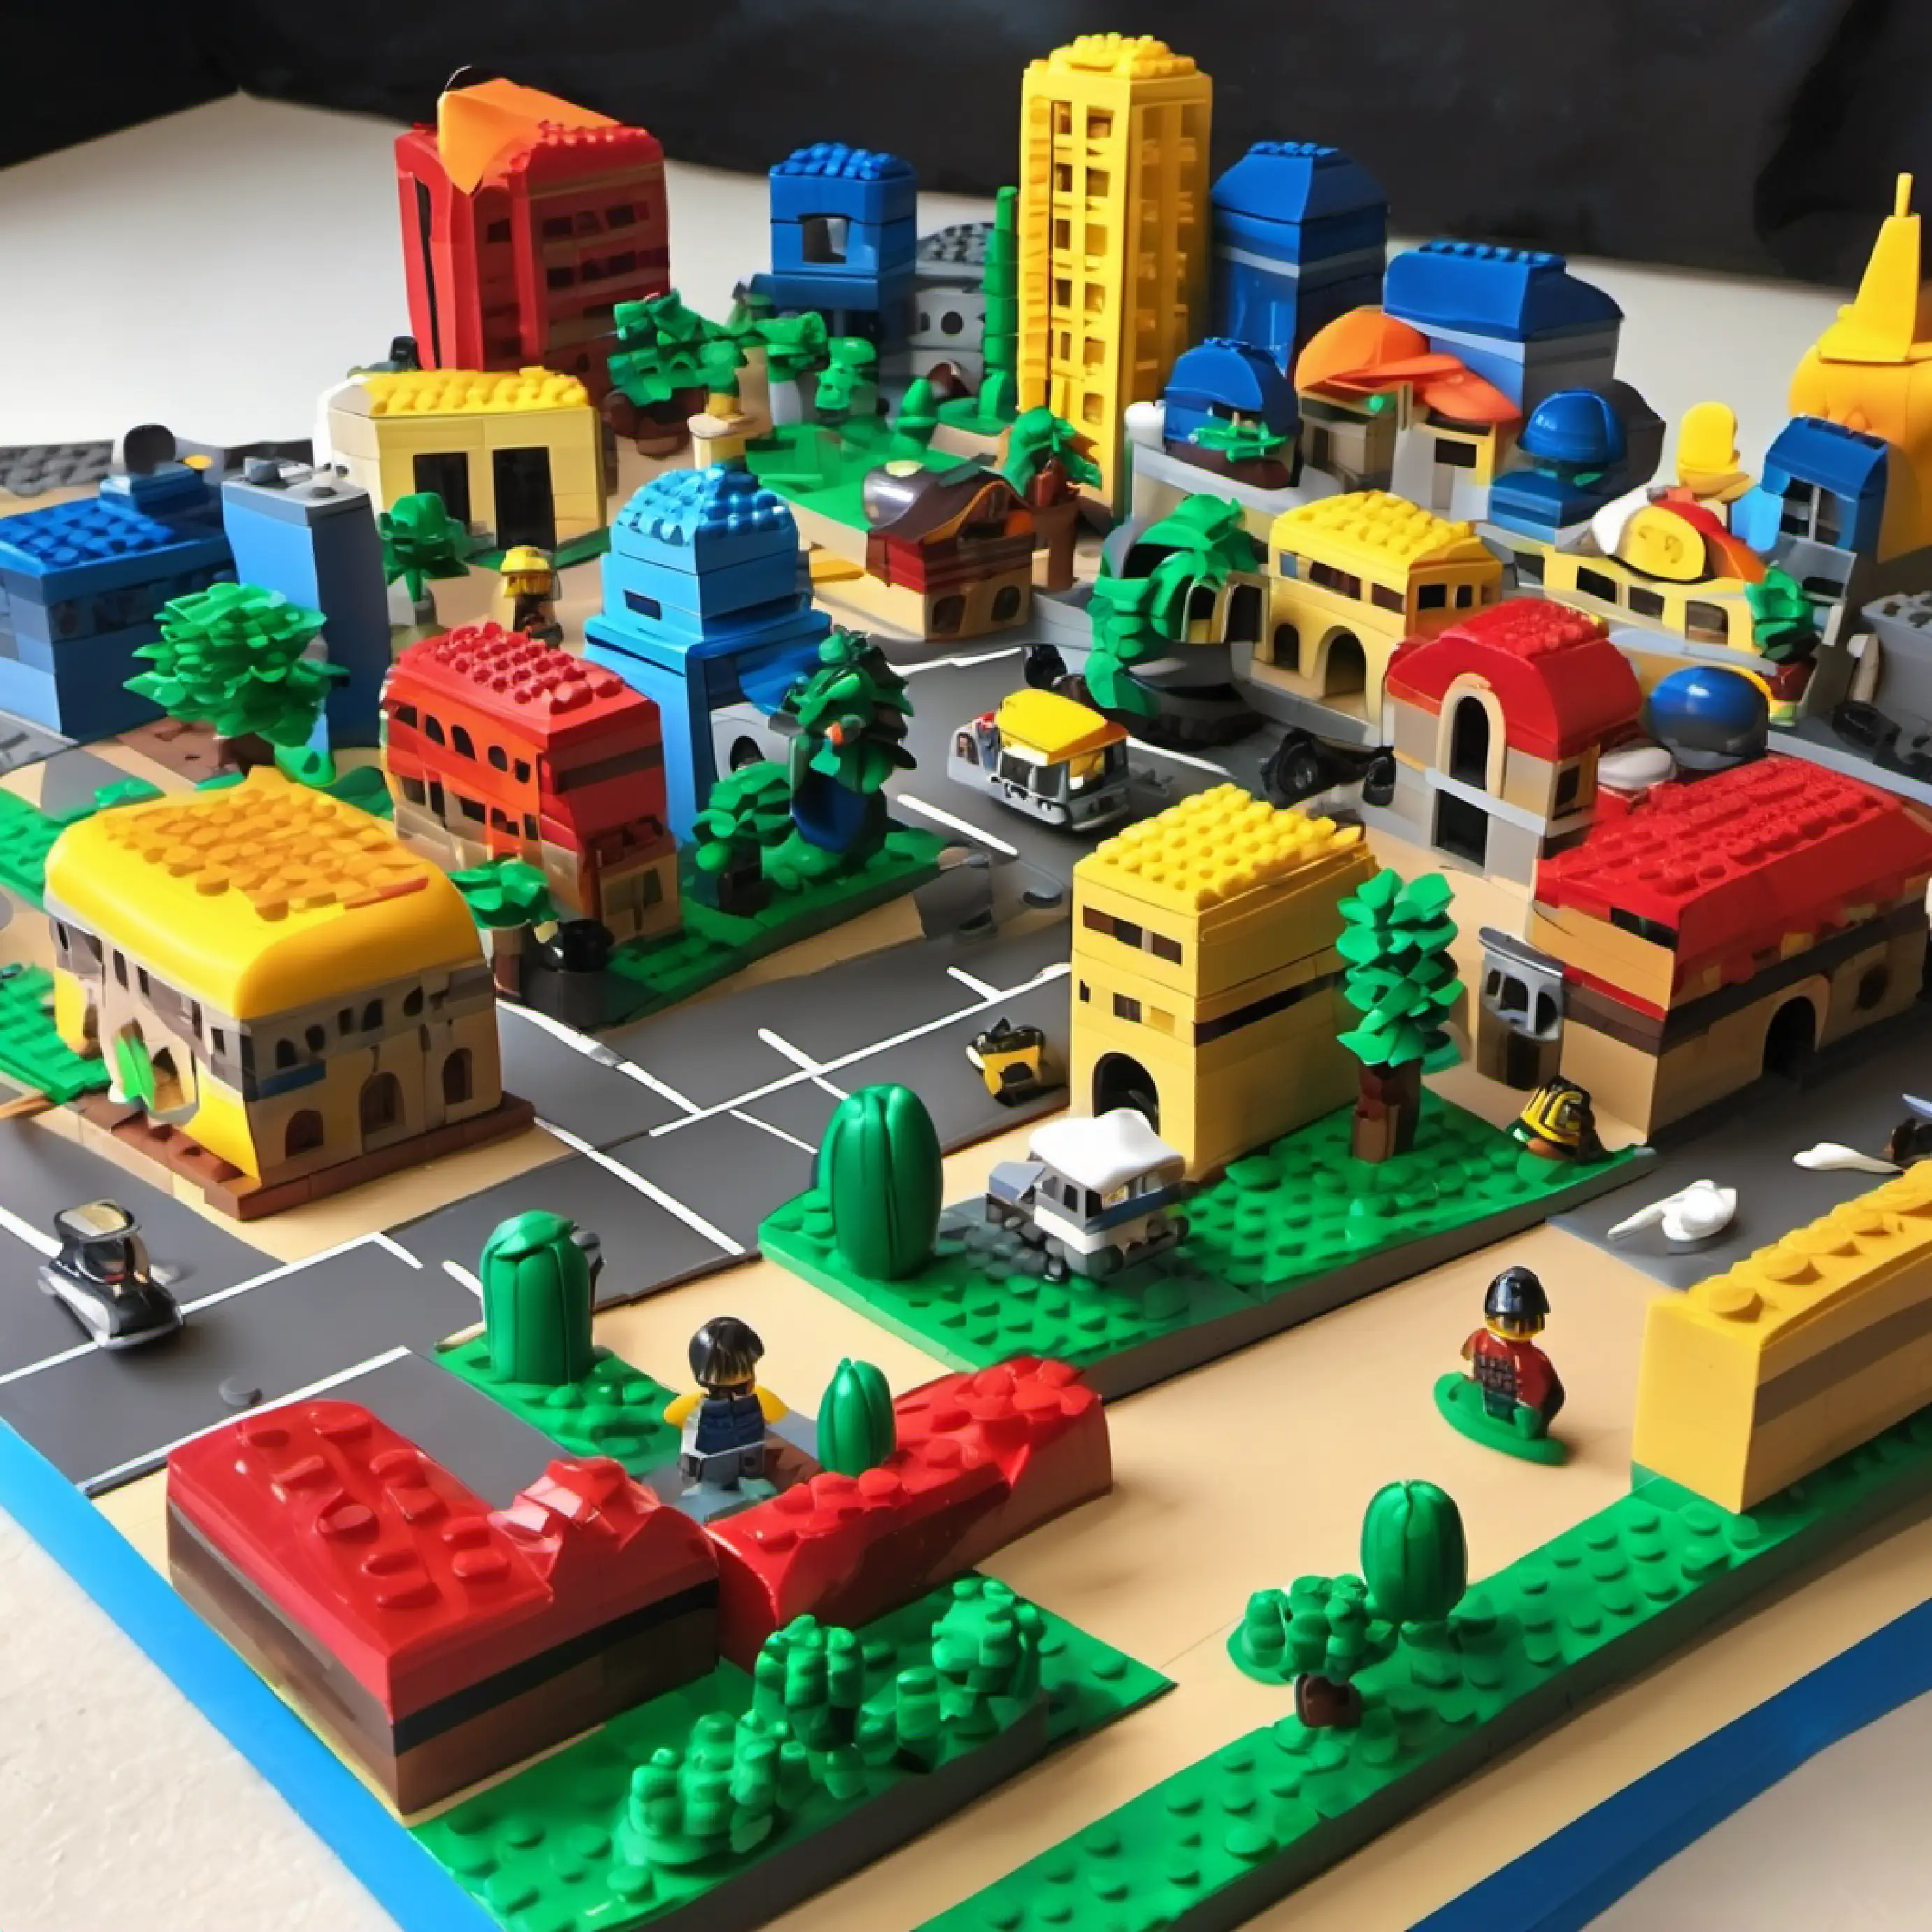 Creating a Lego city